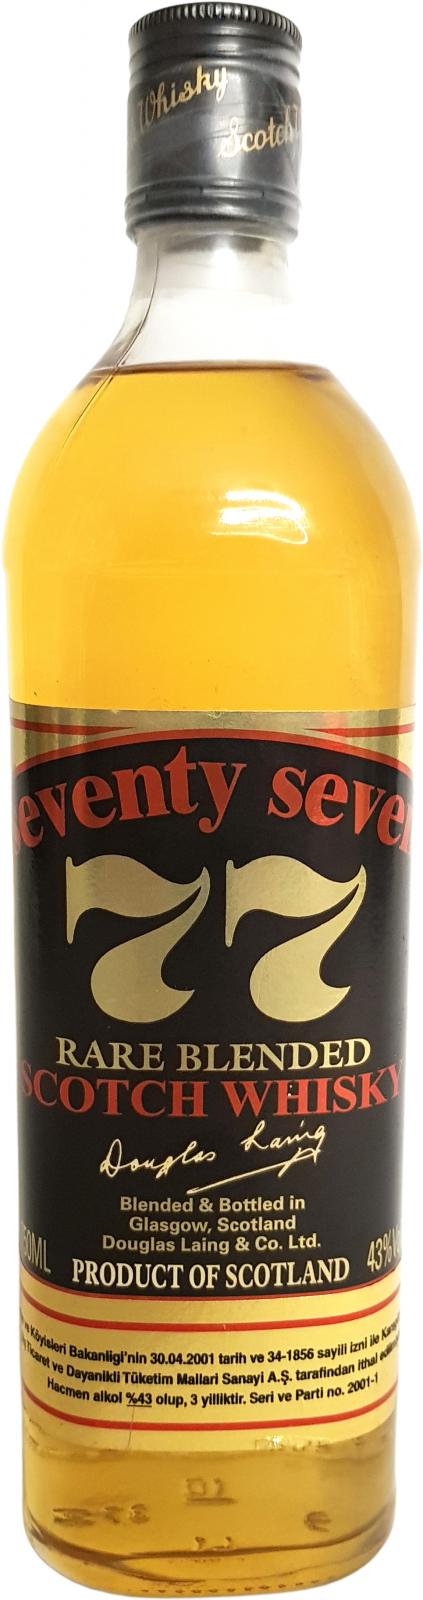 Seventy Seven Rare Blended Scotch Whisky DL Import Turkey 2001 on label 43% 750ml